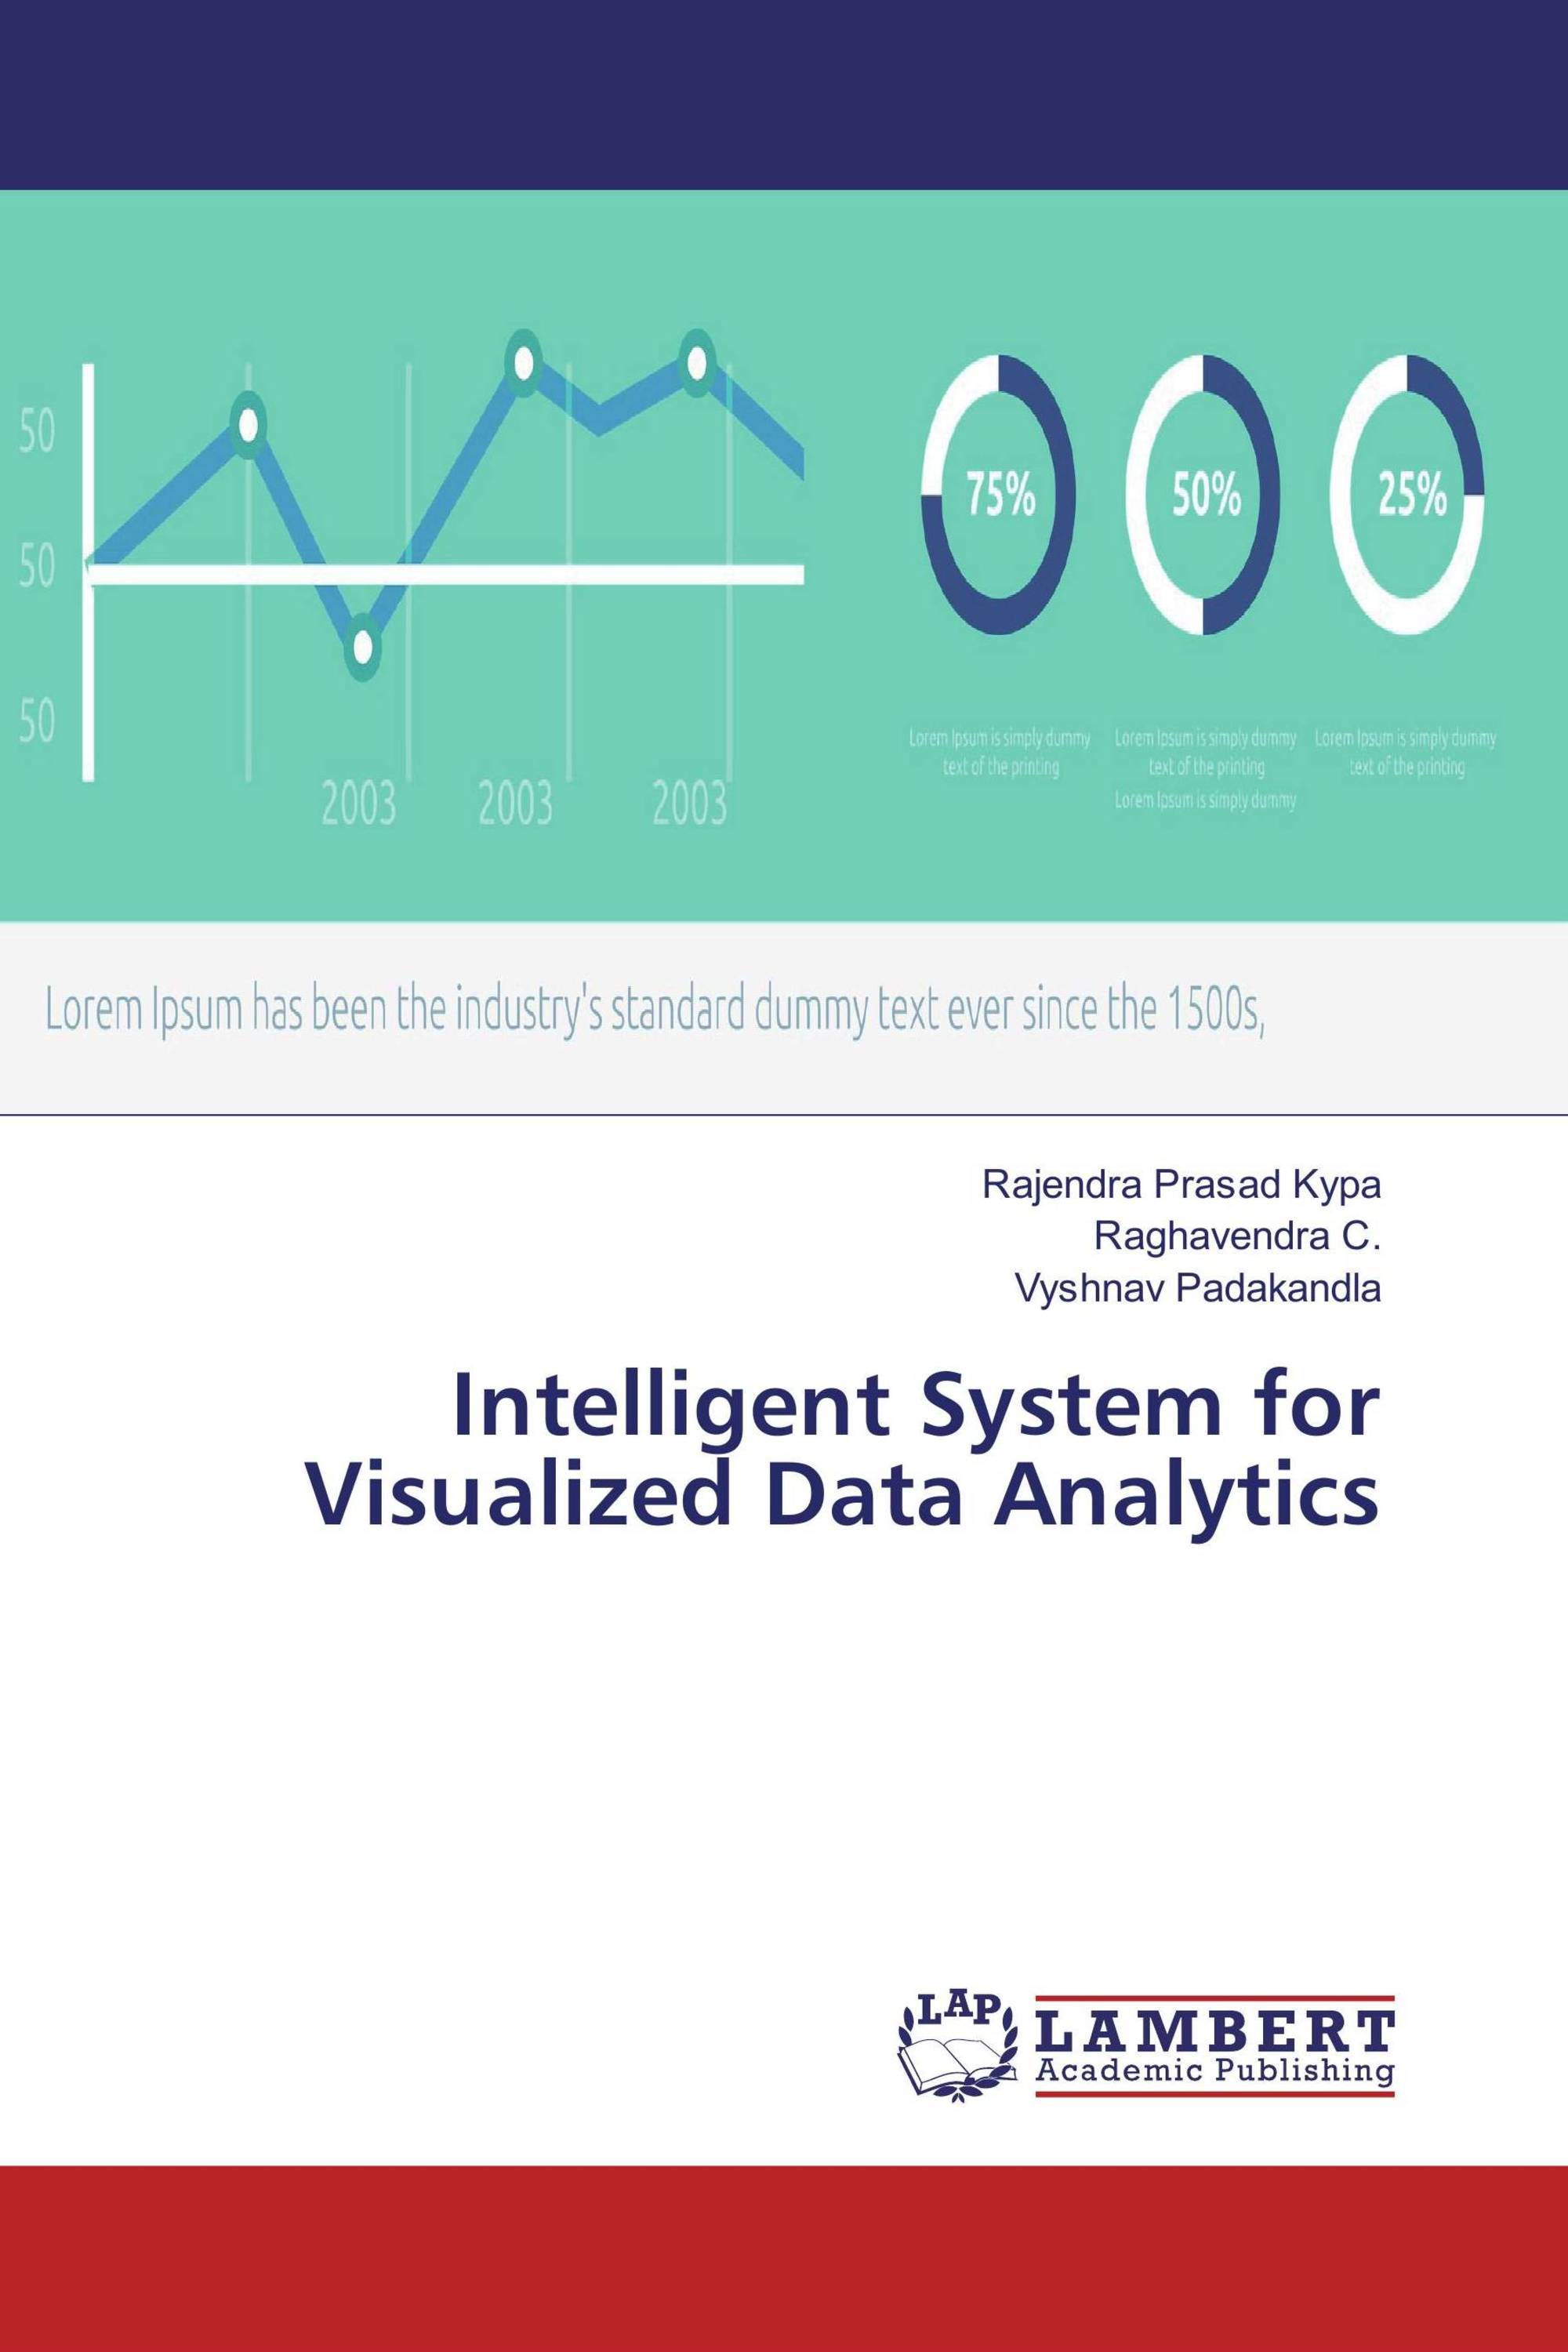 Intelligent system for visualized analytics